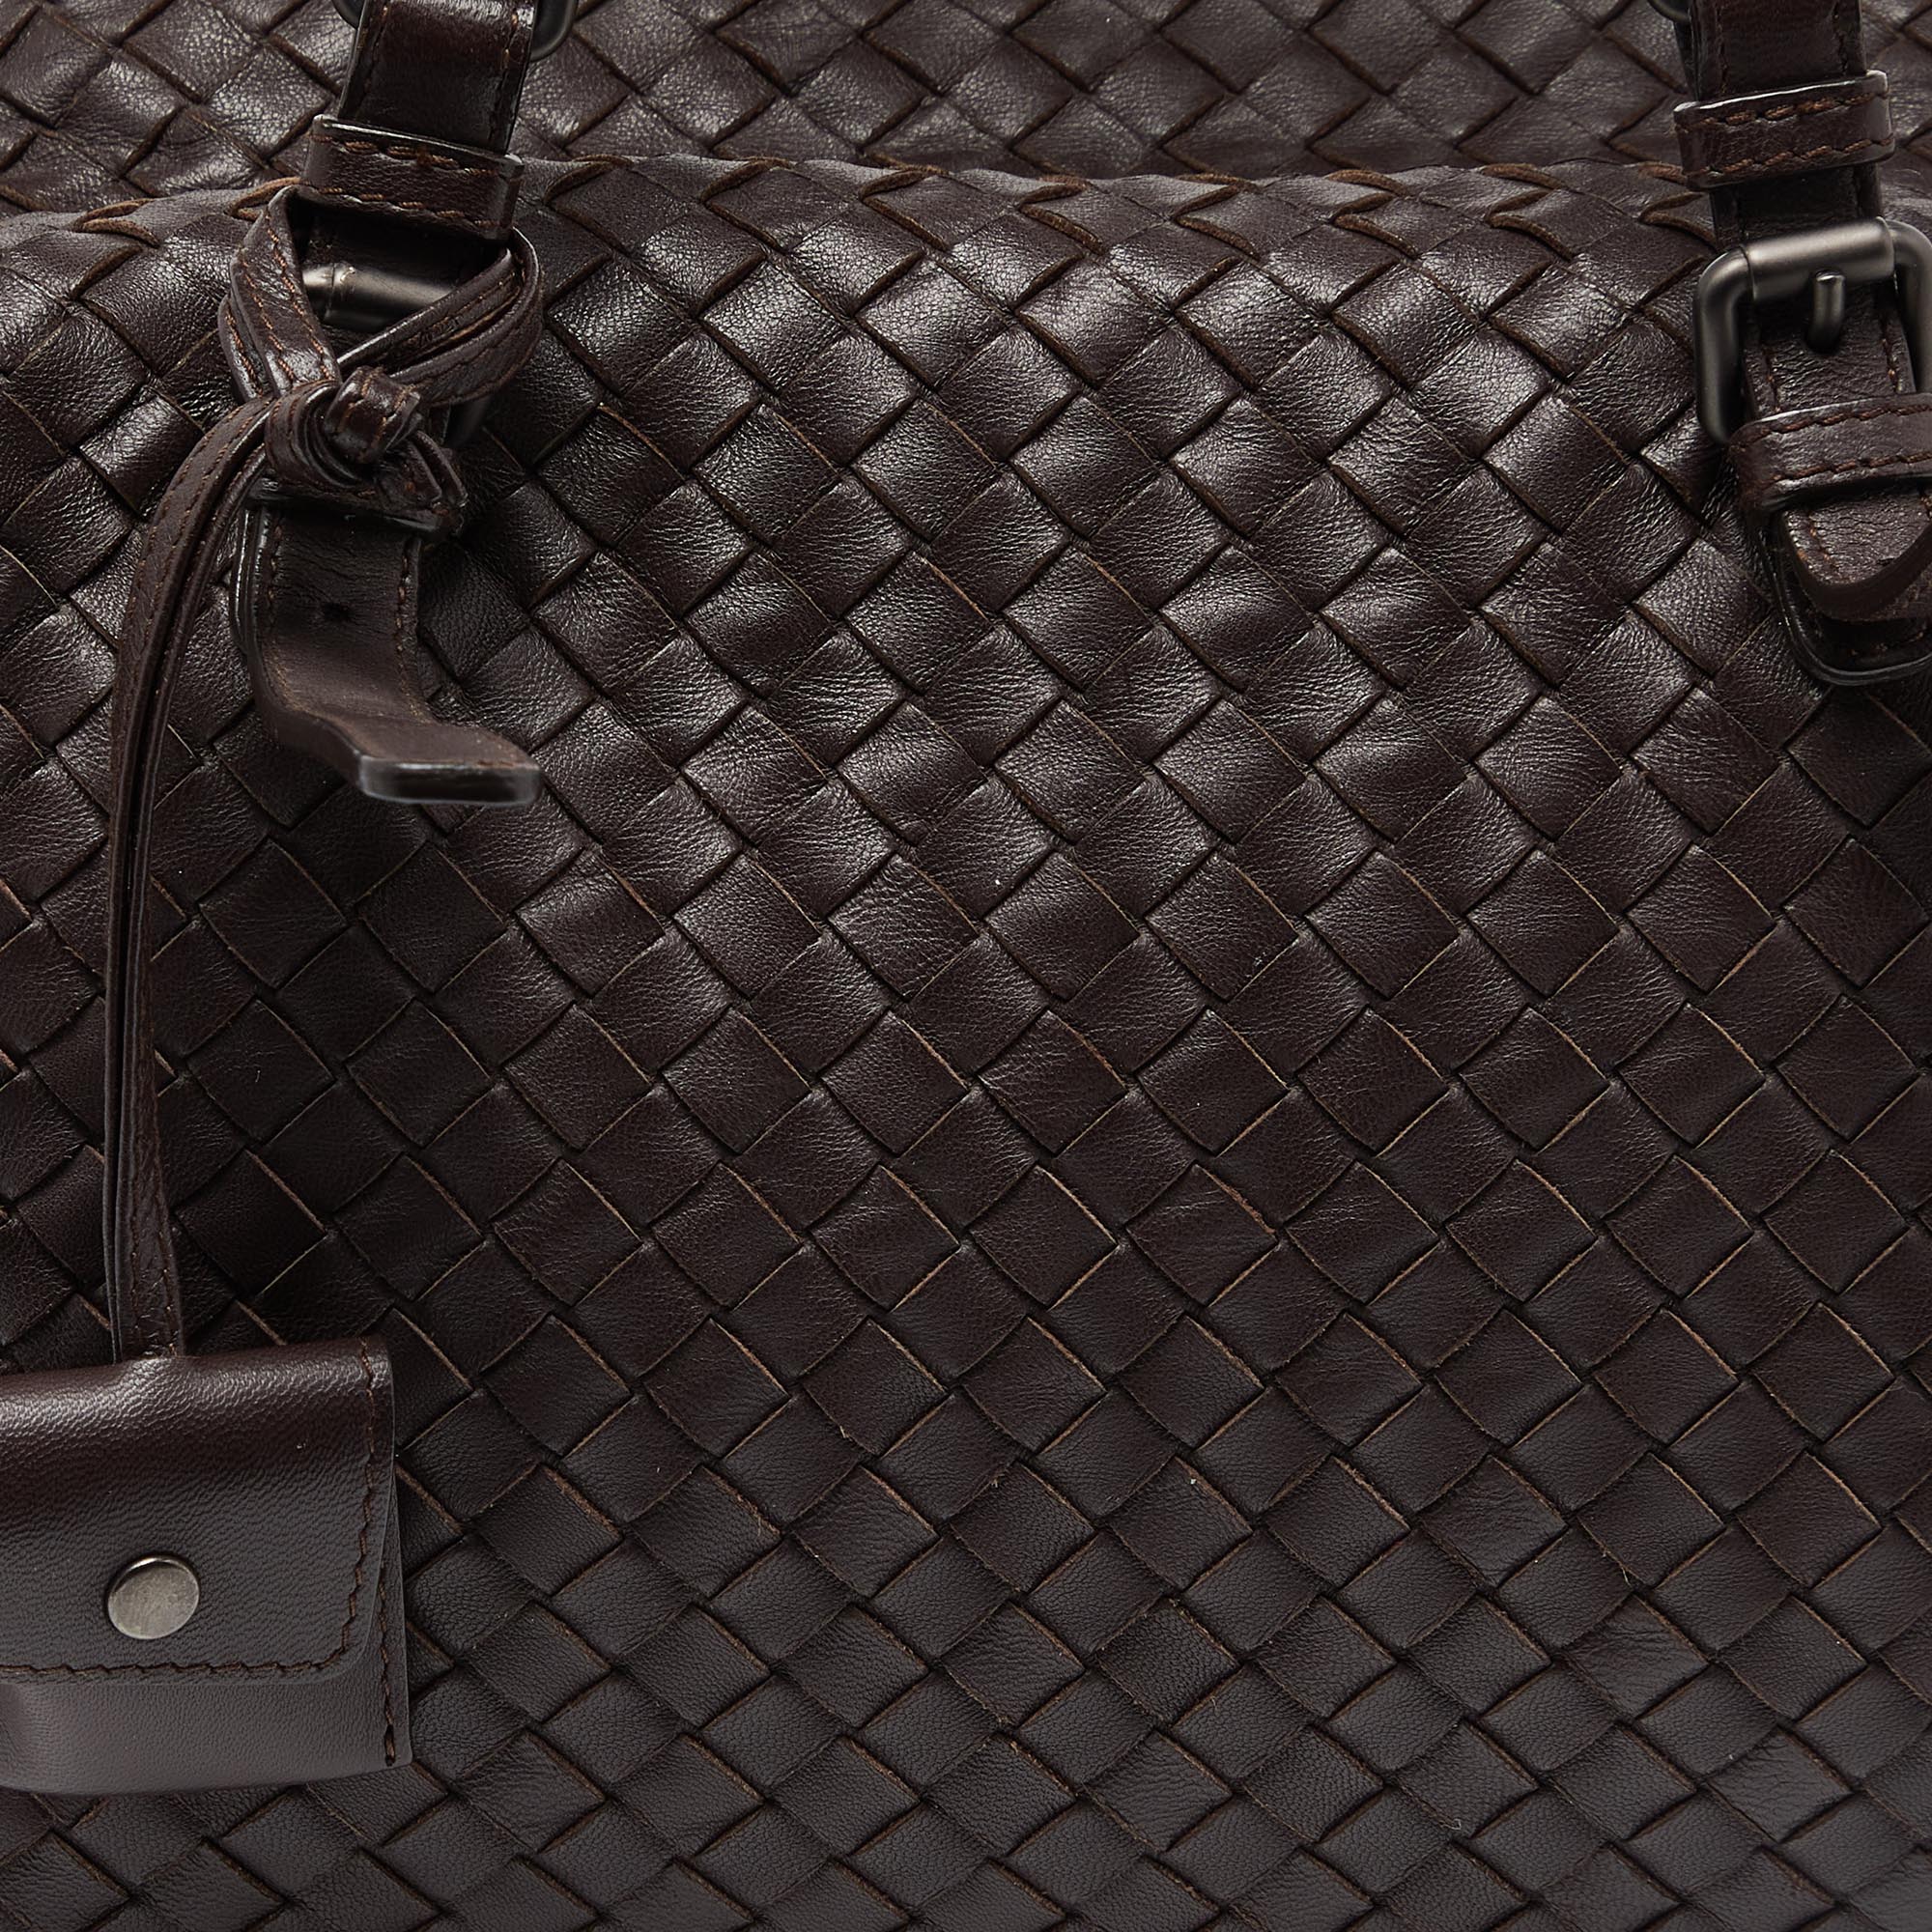 Bottega Veneta Brown Intrecciato Leather Montaigne Bag